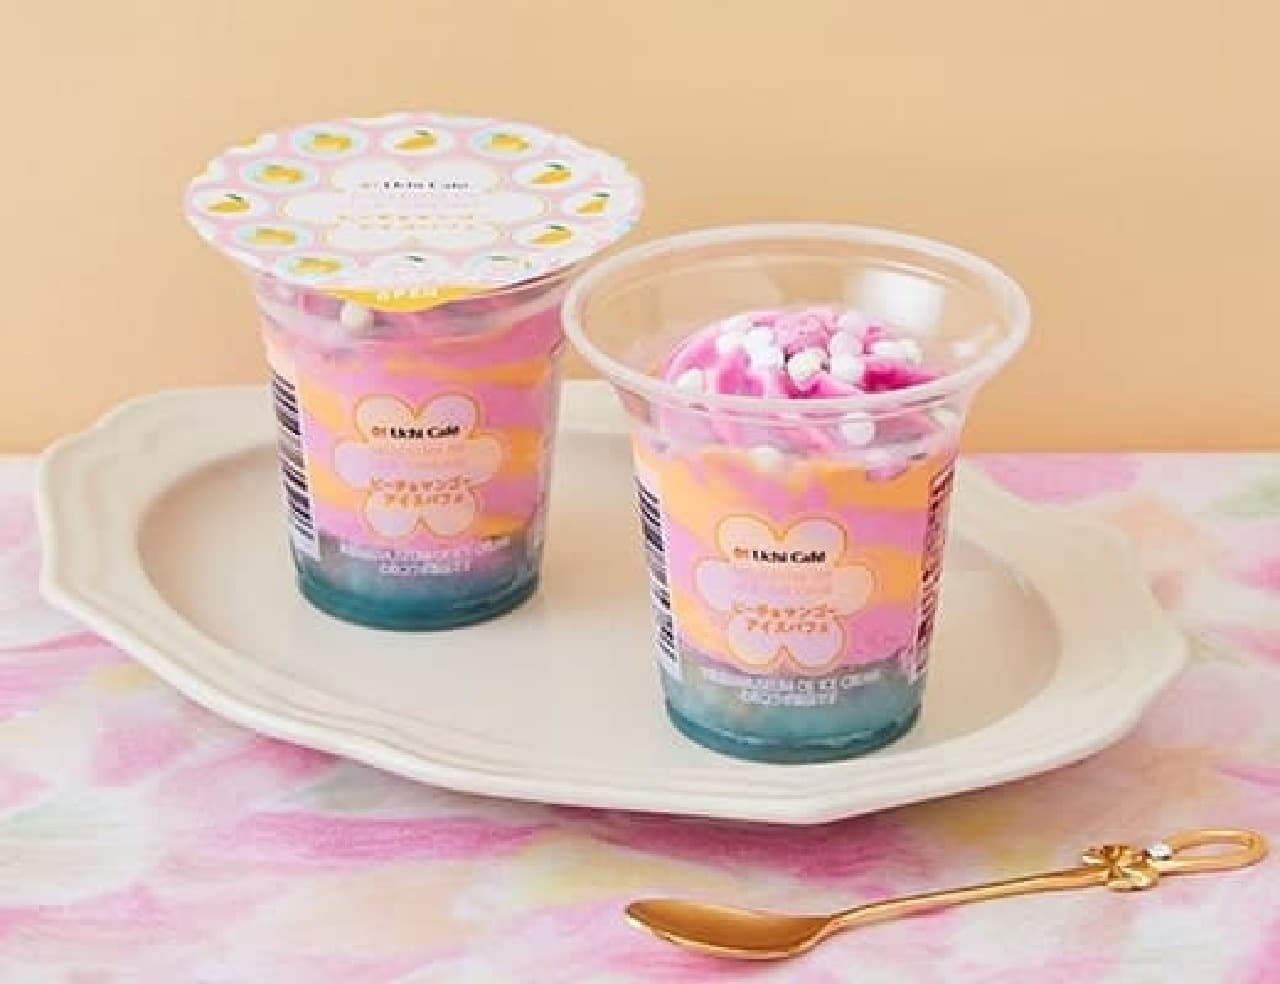 LAWSON "UCHICAFE MOIC Peach & Mango Ice Cream Parfait 160ml